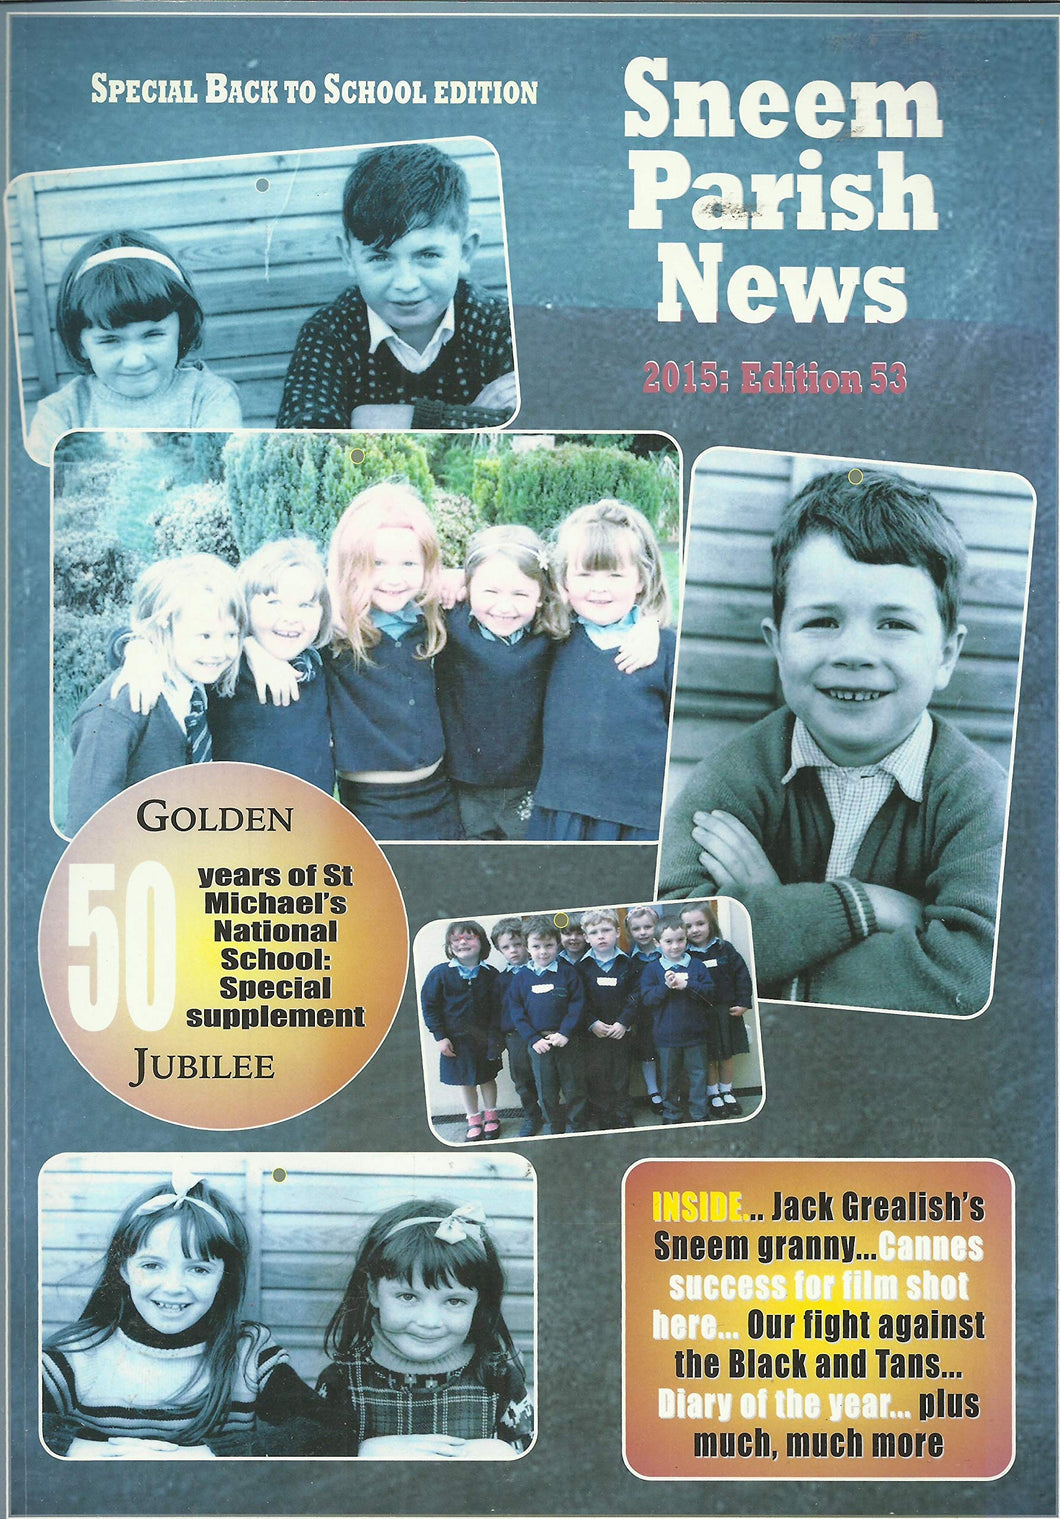 Sneem Parish News 2015: Edition 53 - Special Back to School Edition